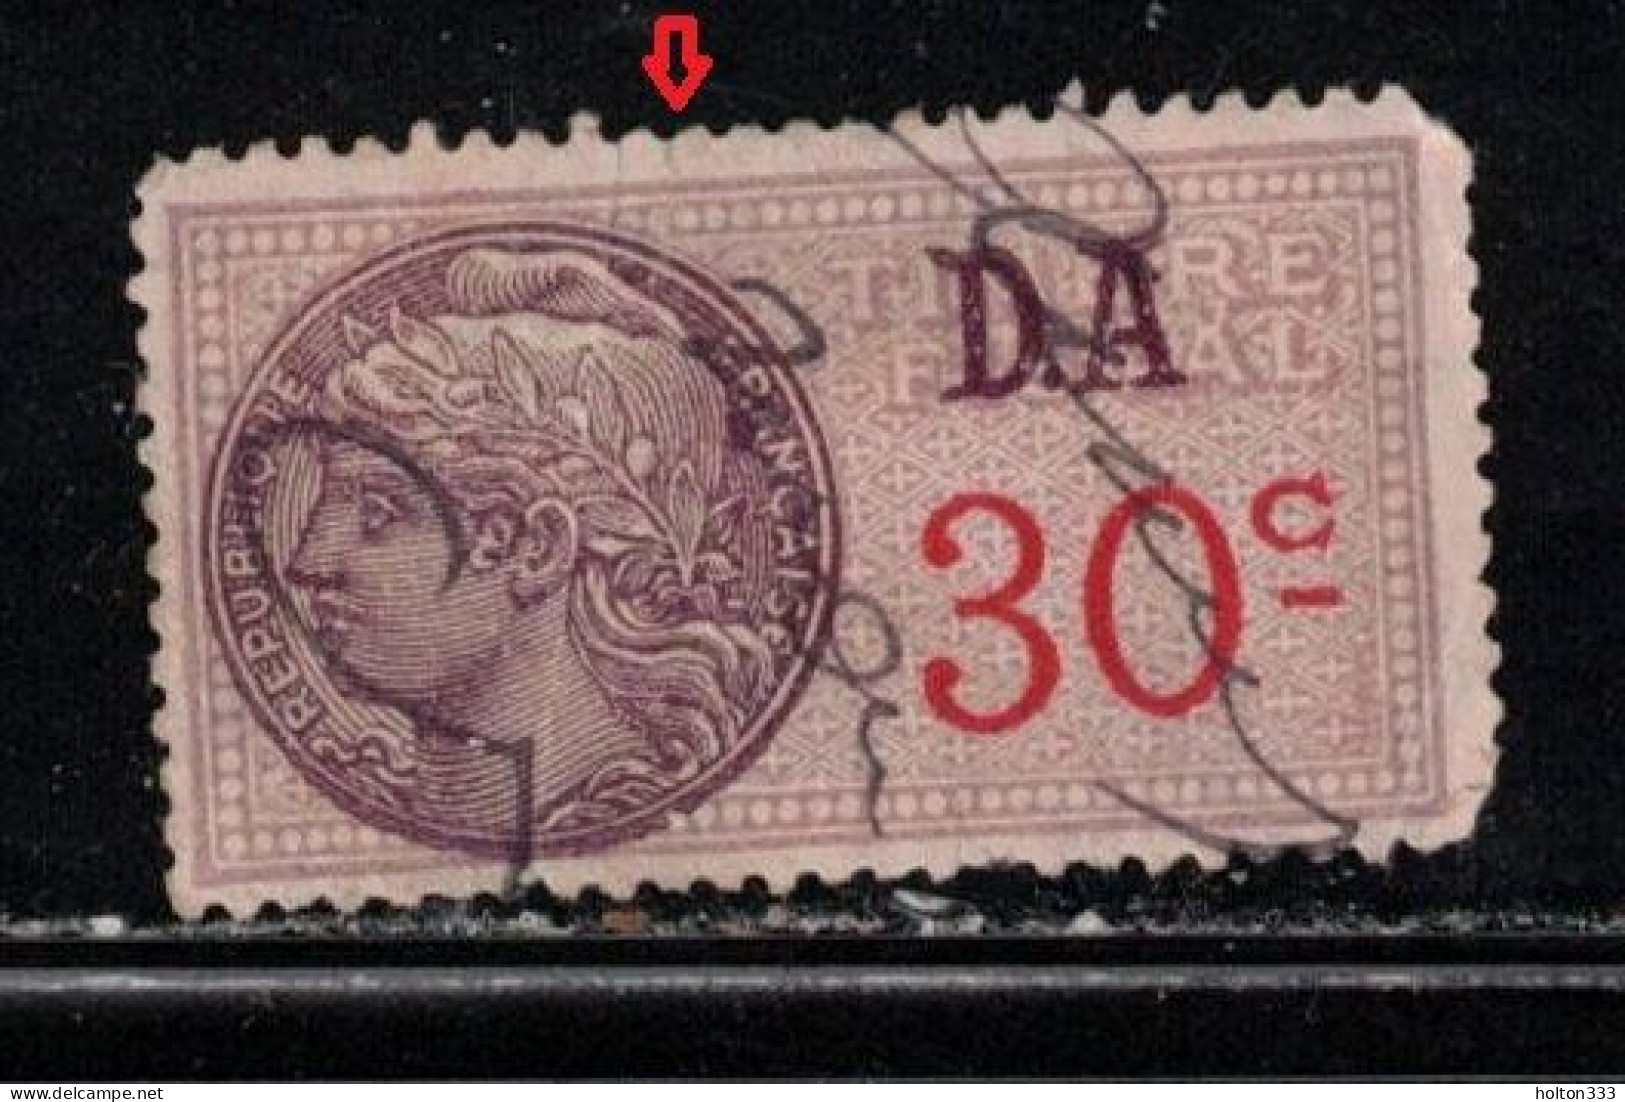 FRANCE Scott # ??? Used Revenue Stamp - Small Tear Top Center - Marken